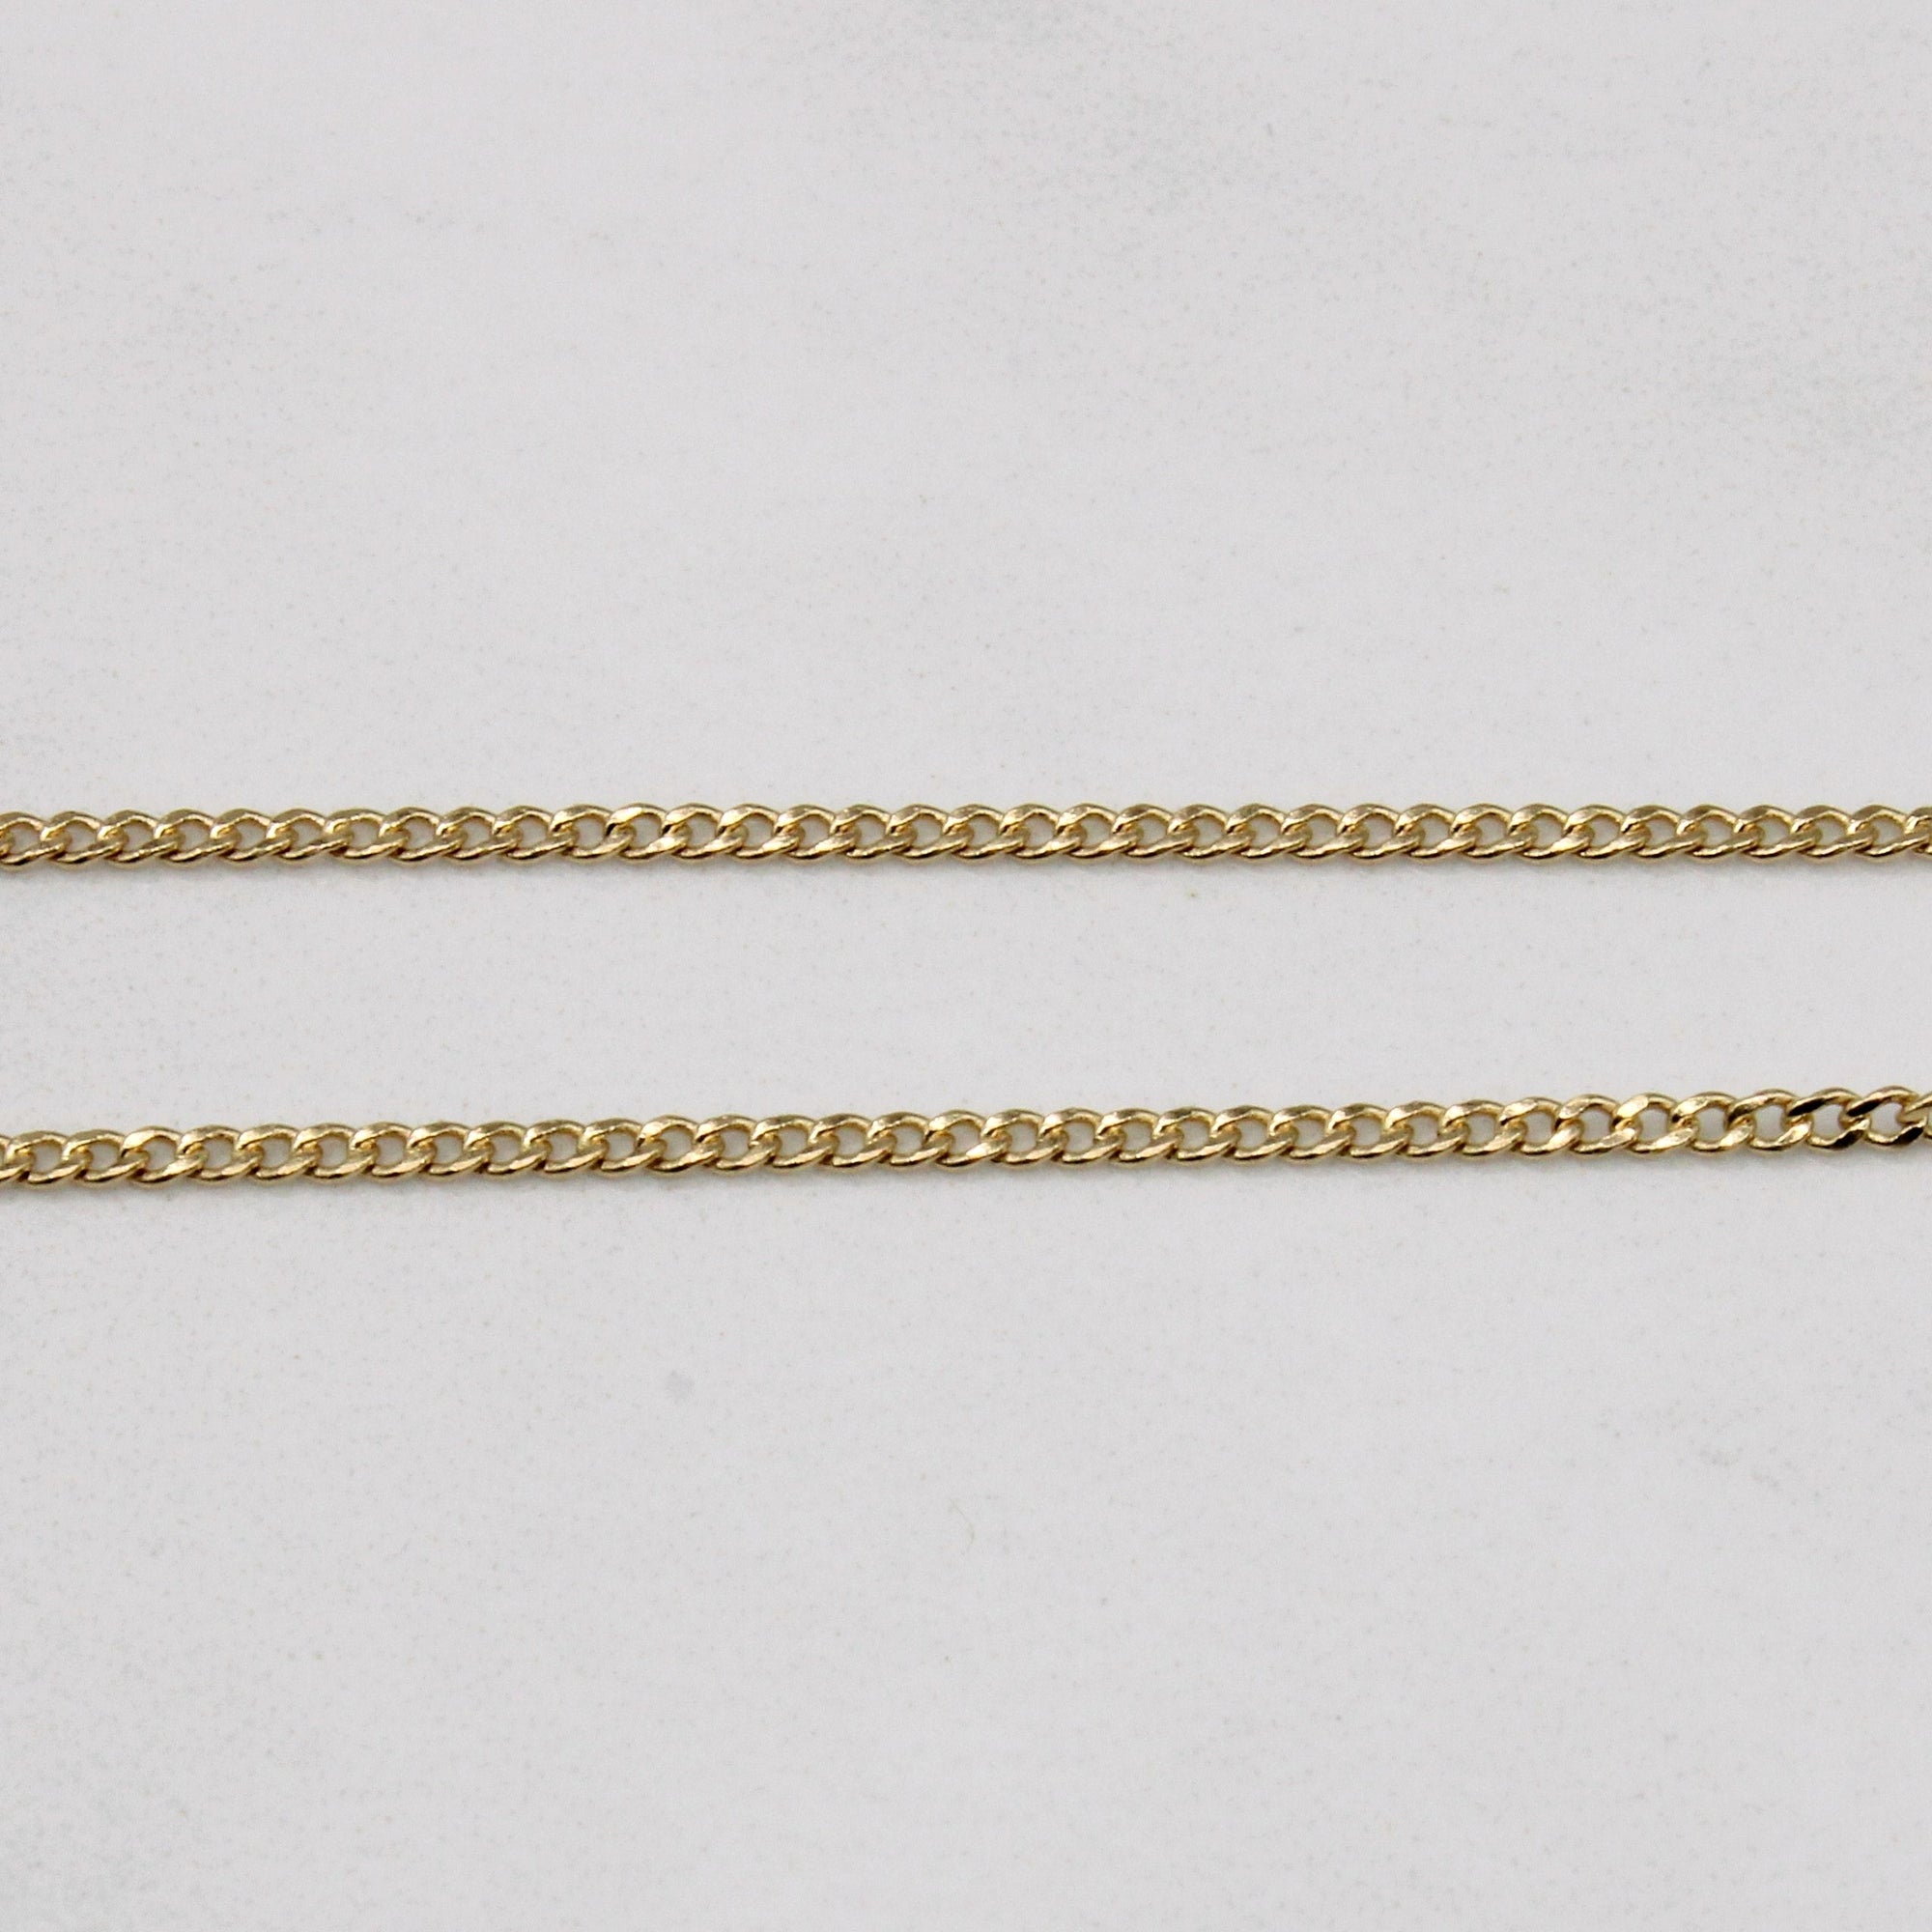 14k & 15k Yellow Gold Heart Lock Pendant & Necklace | 18